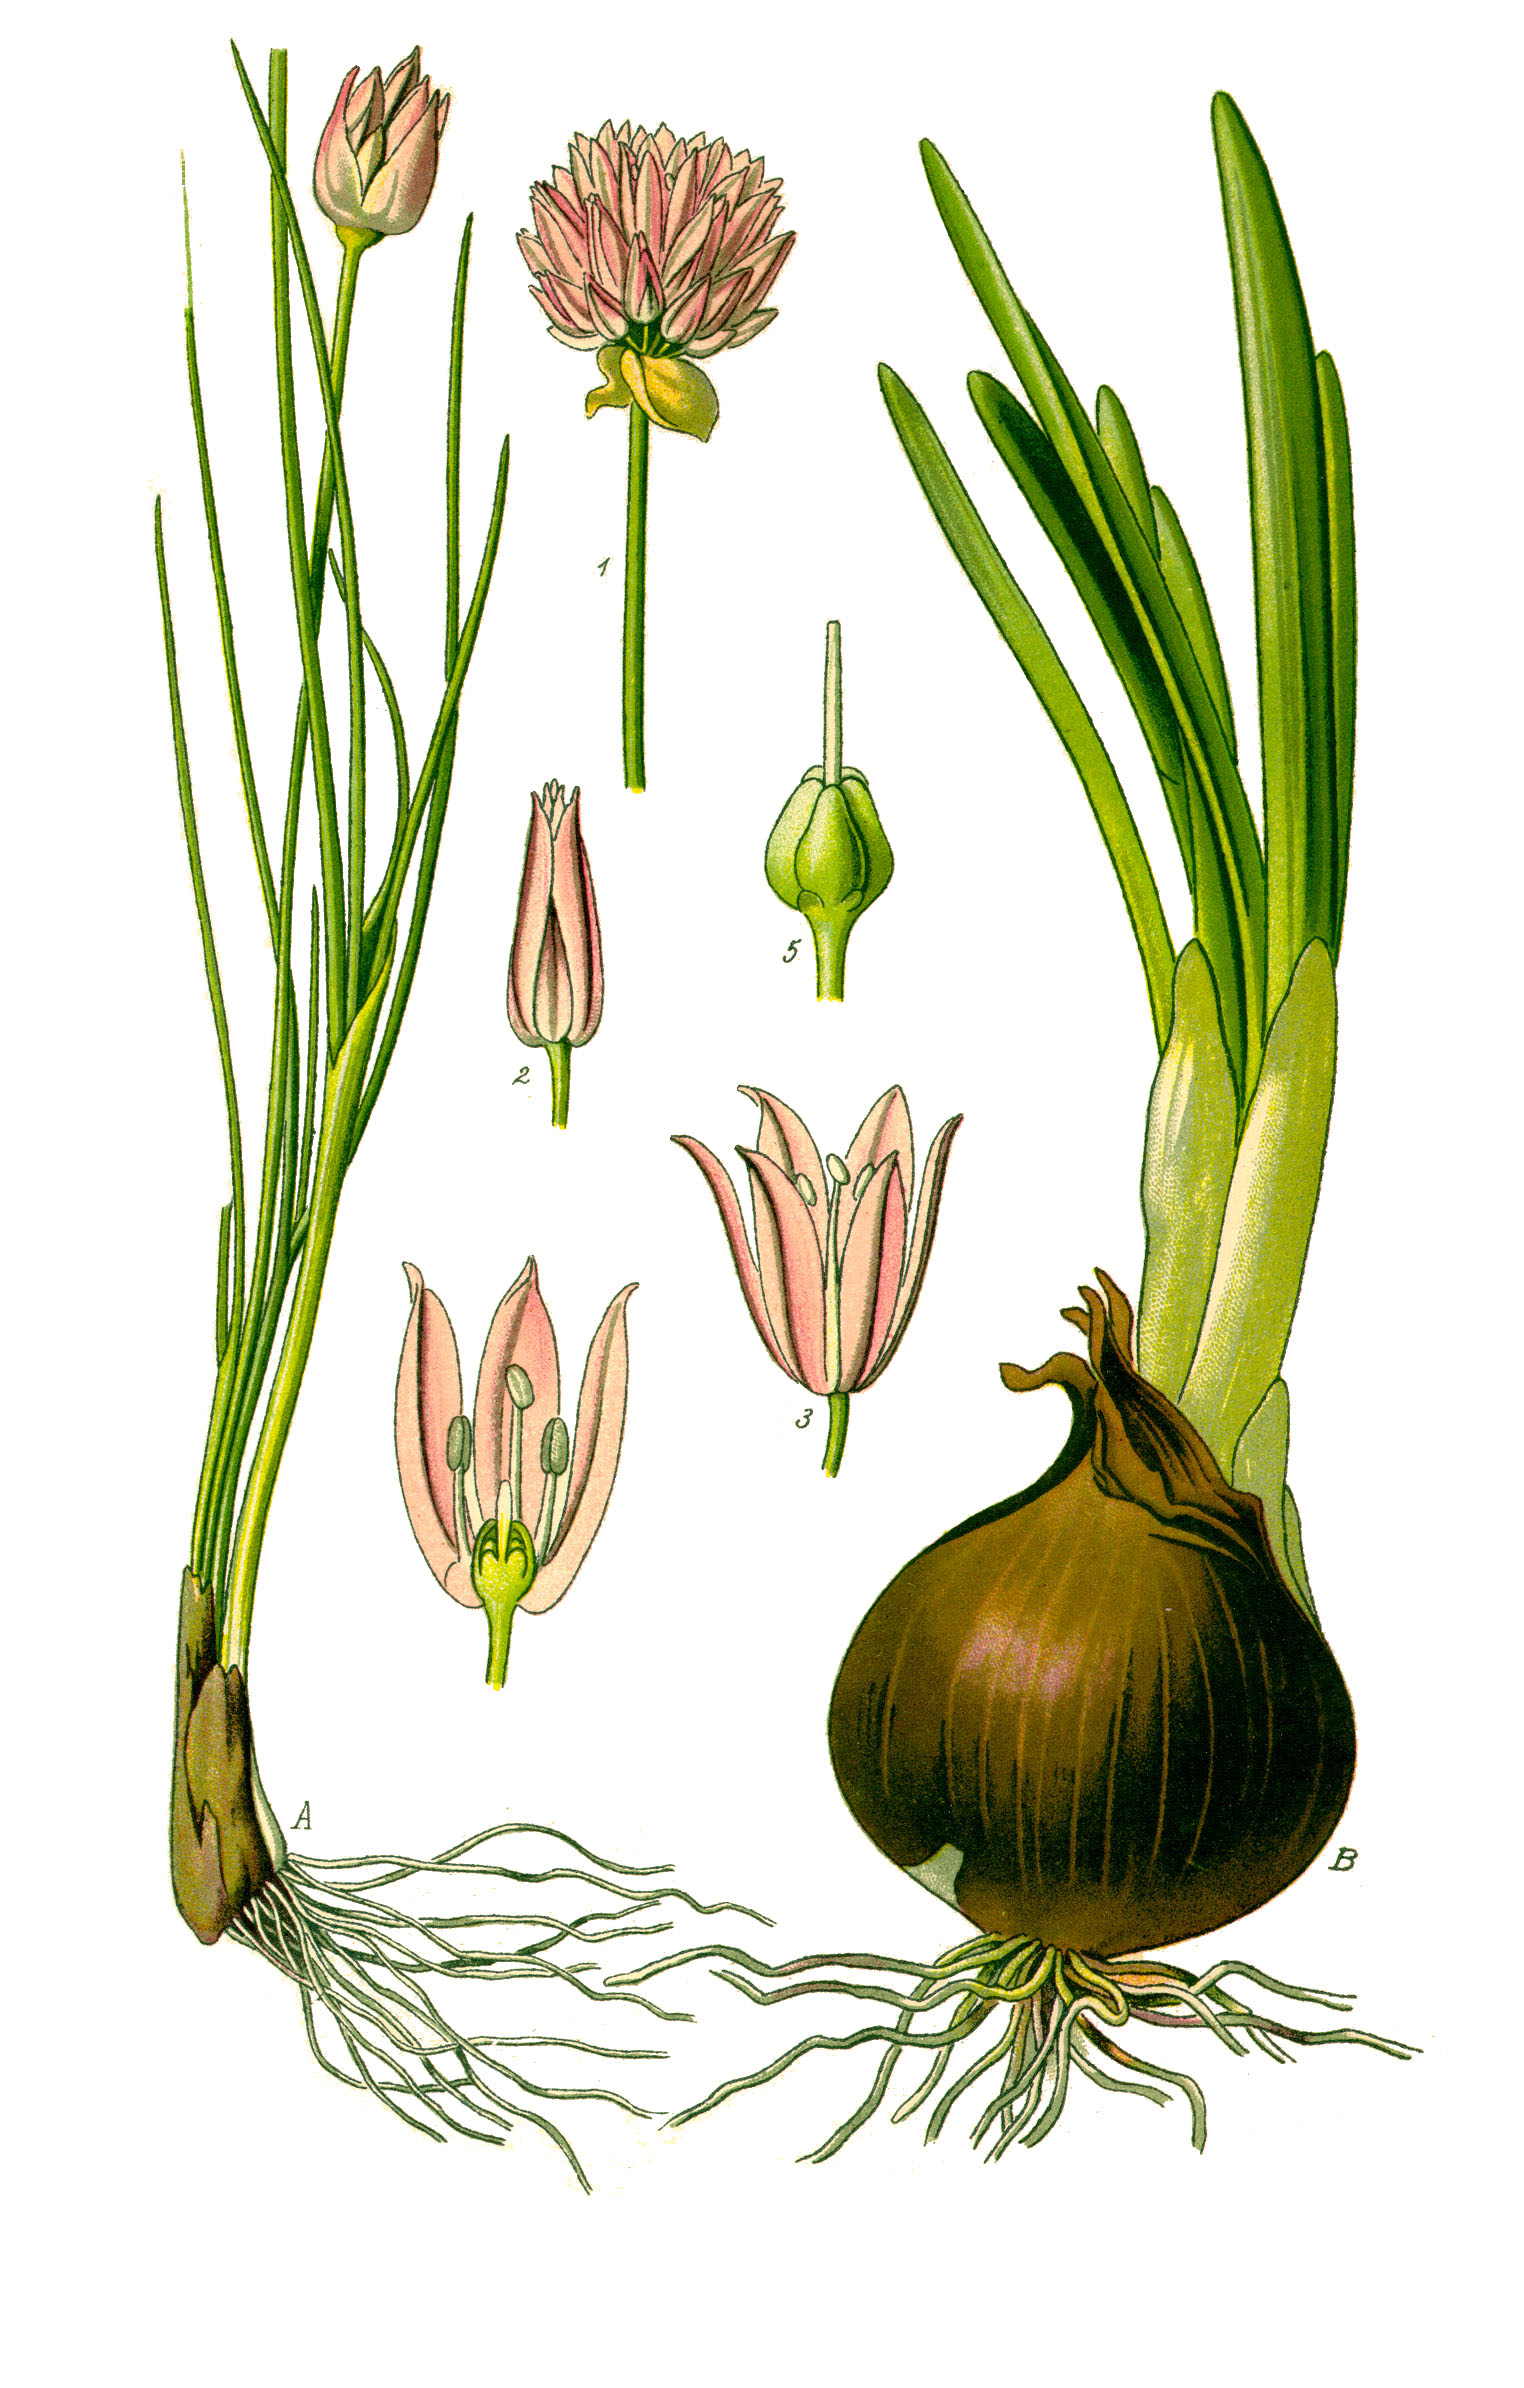 Allium schoenoprasum (chive)